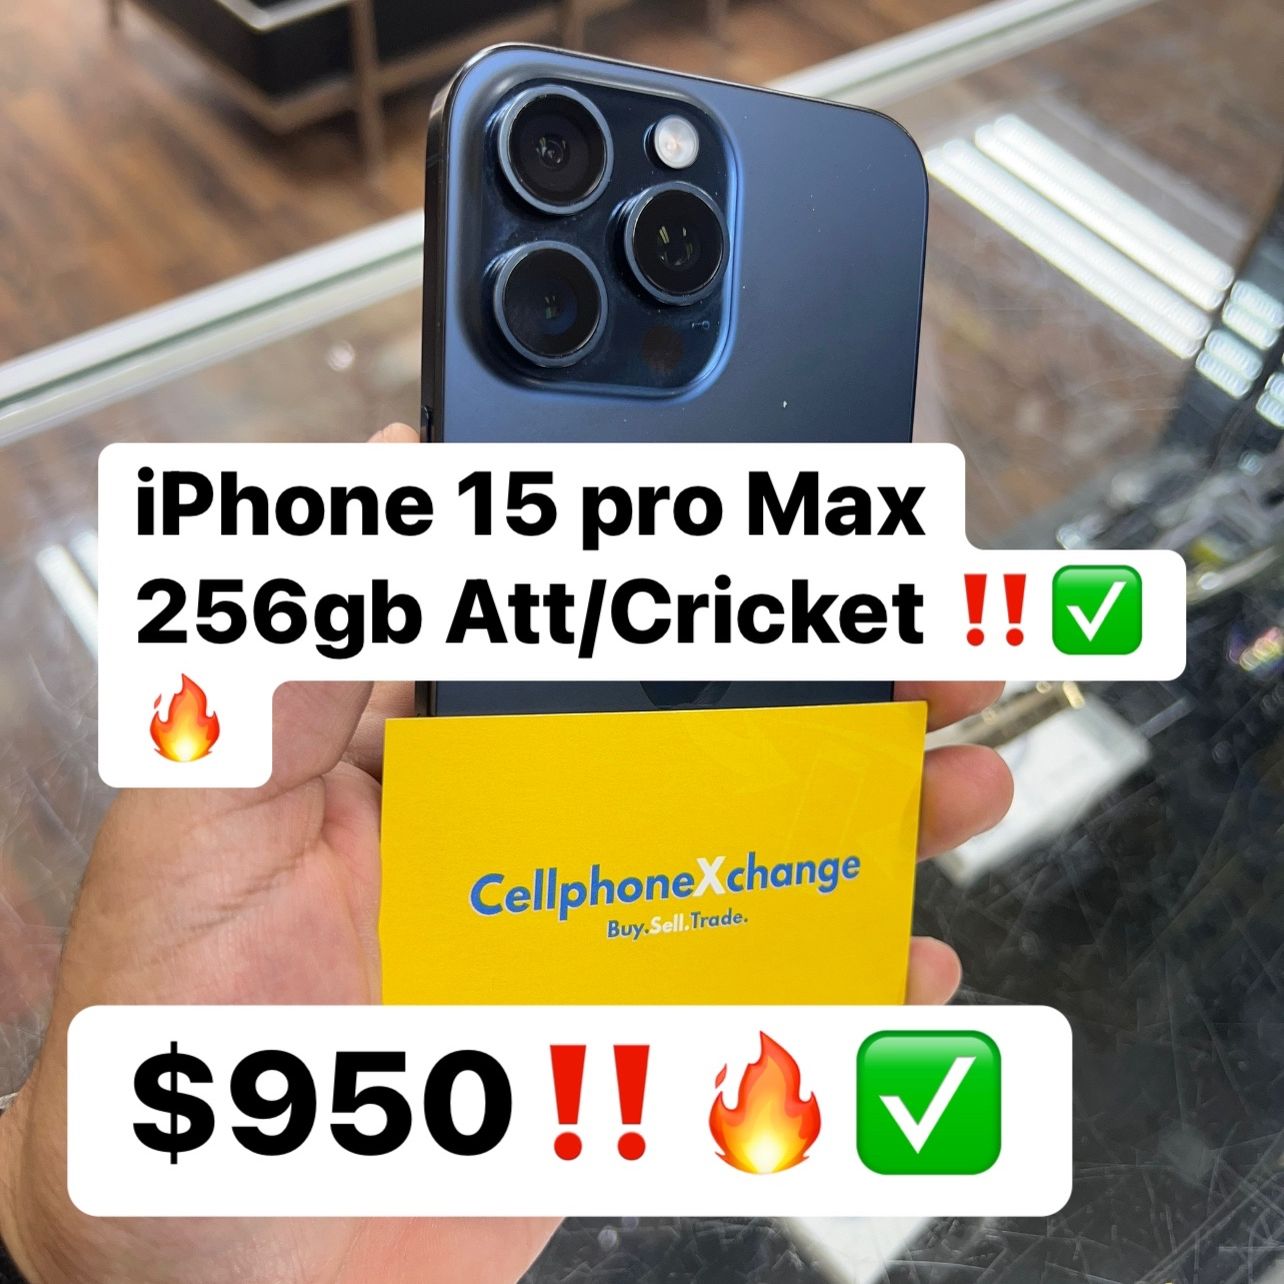 iPhone 15 Pro Max 256gb Att/Cricket 